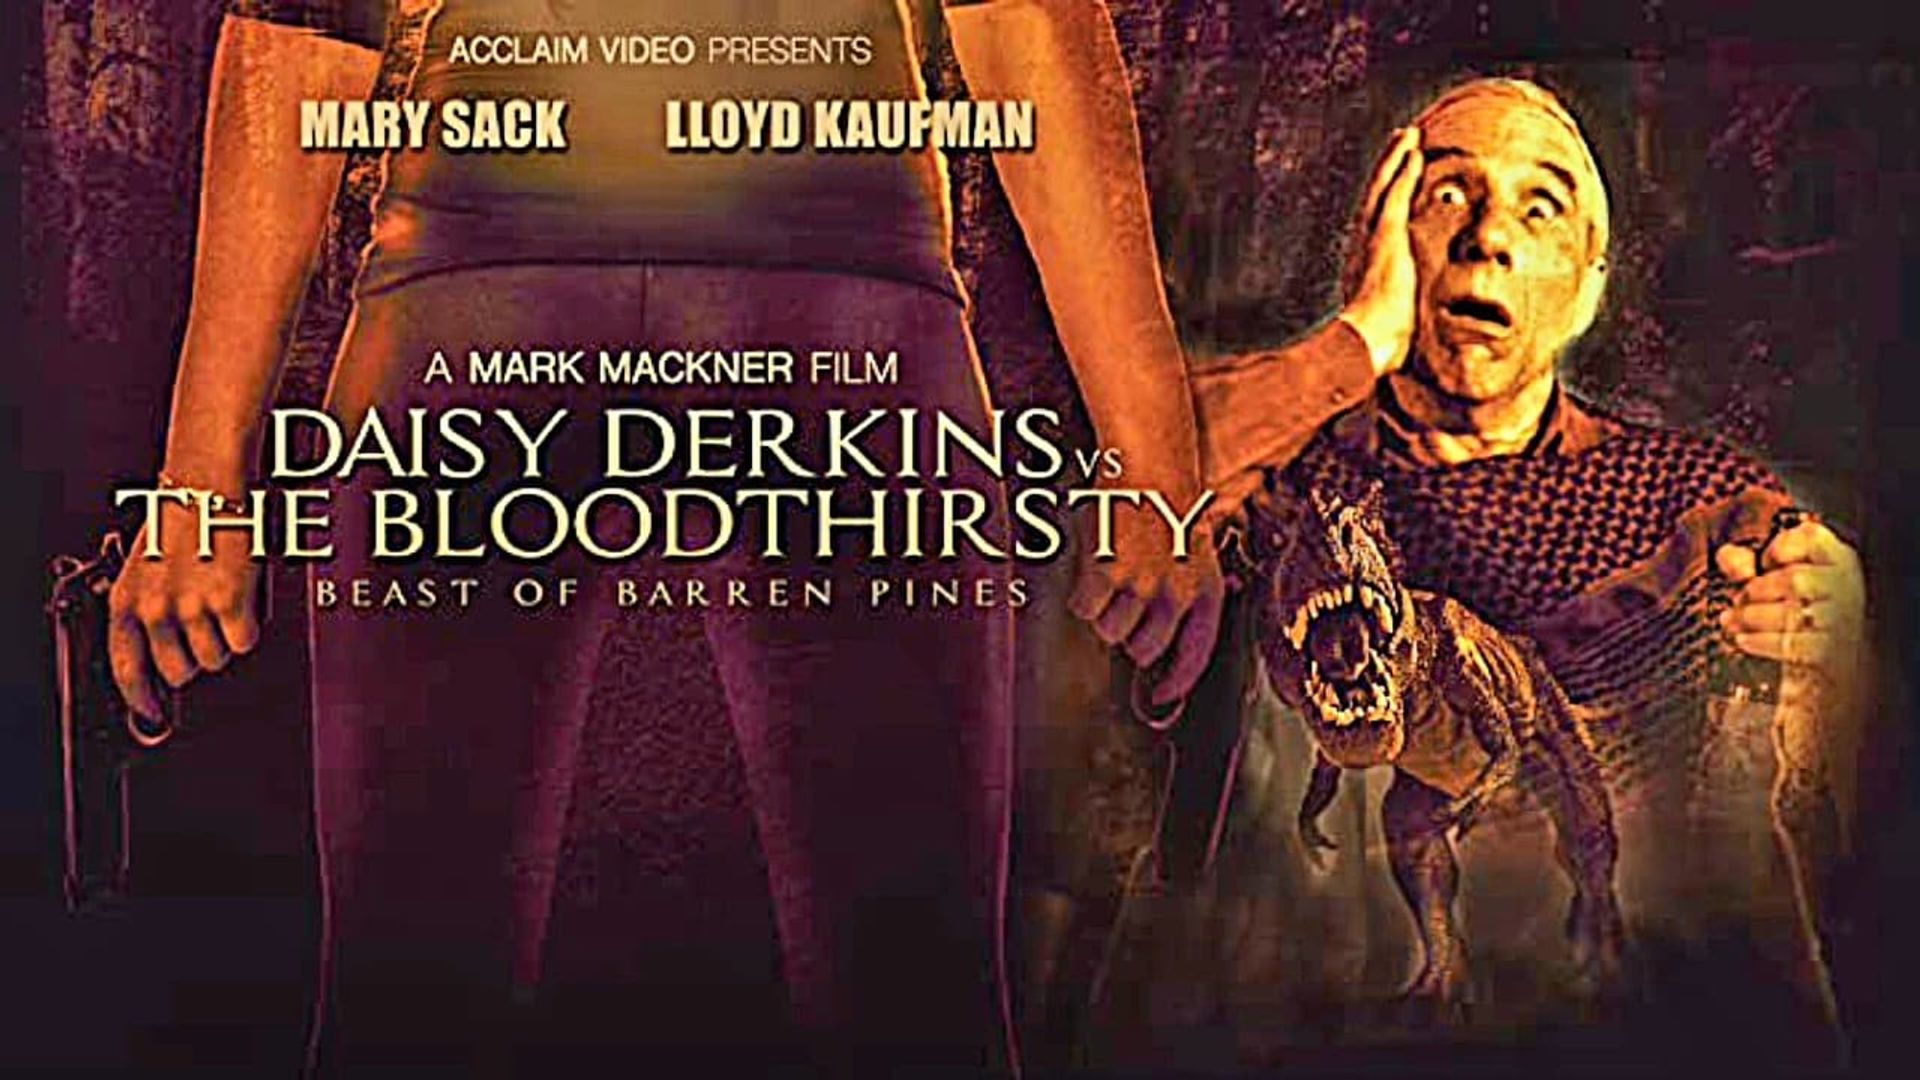 Daisy Derkins vs. The Bloodthirsty Beast of Barren Pines! background